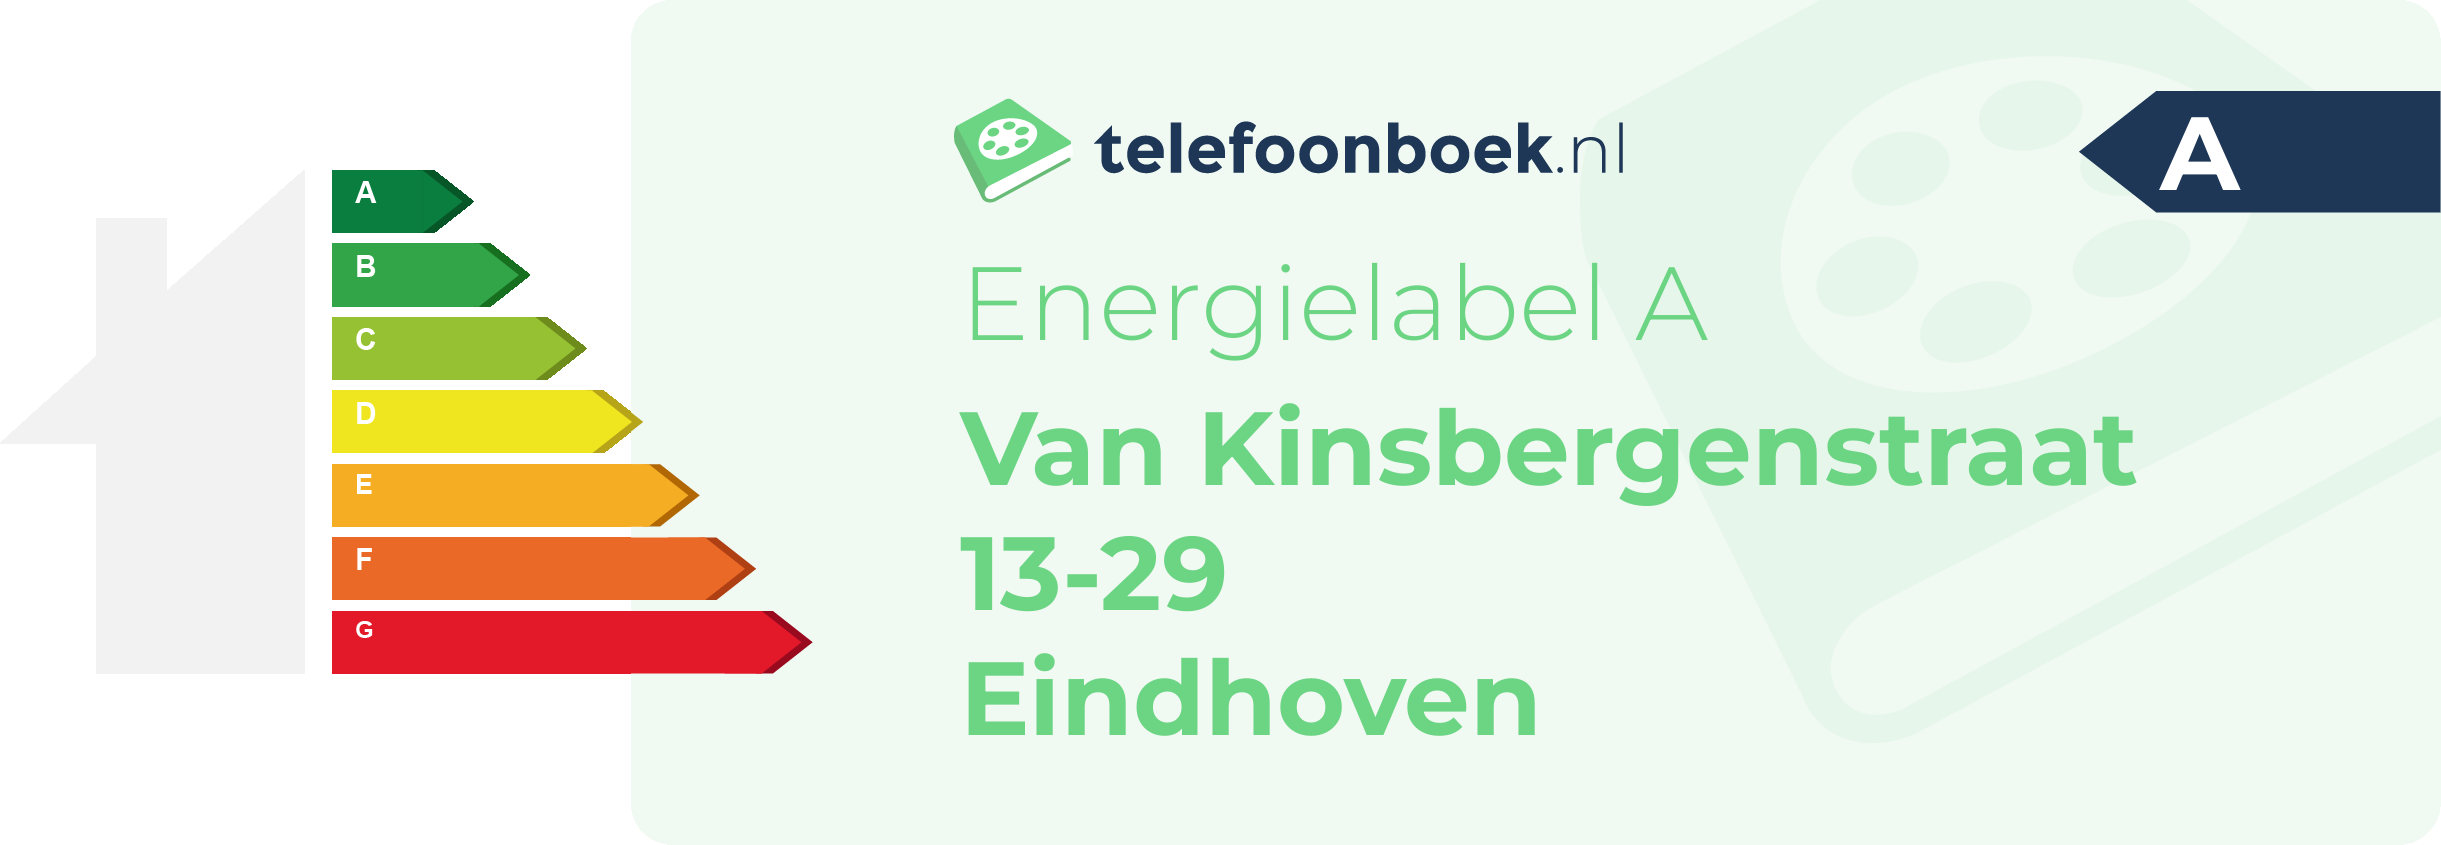 Energielabel Van Kinsbergenstraat 13-29 Eindhoven